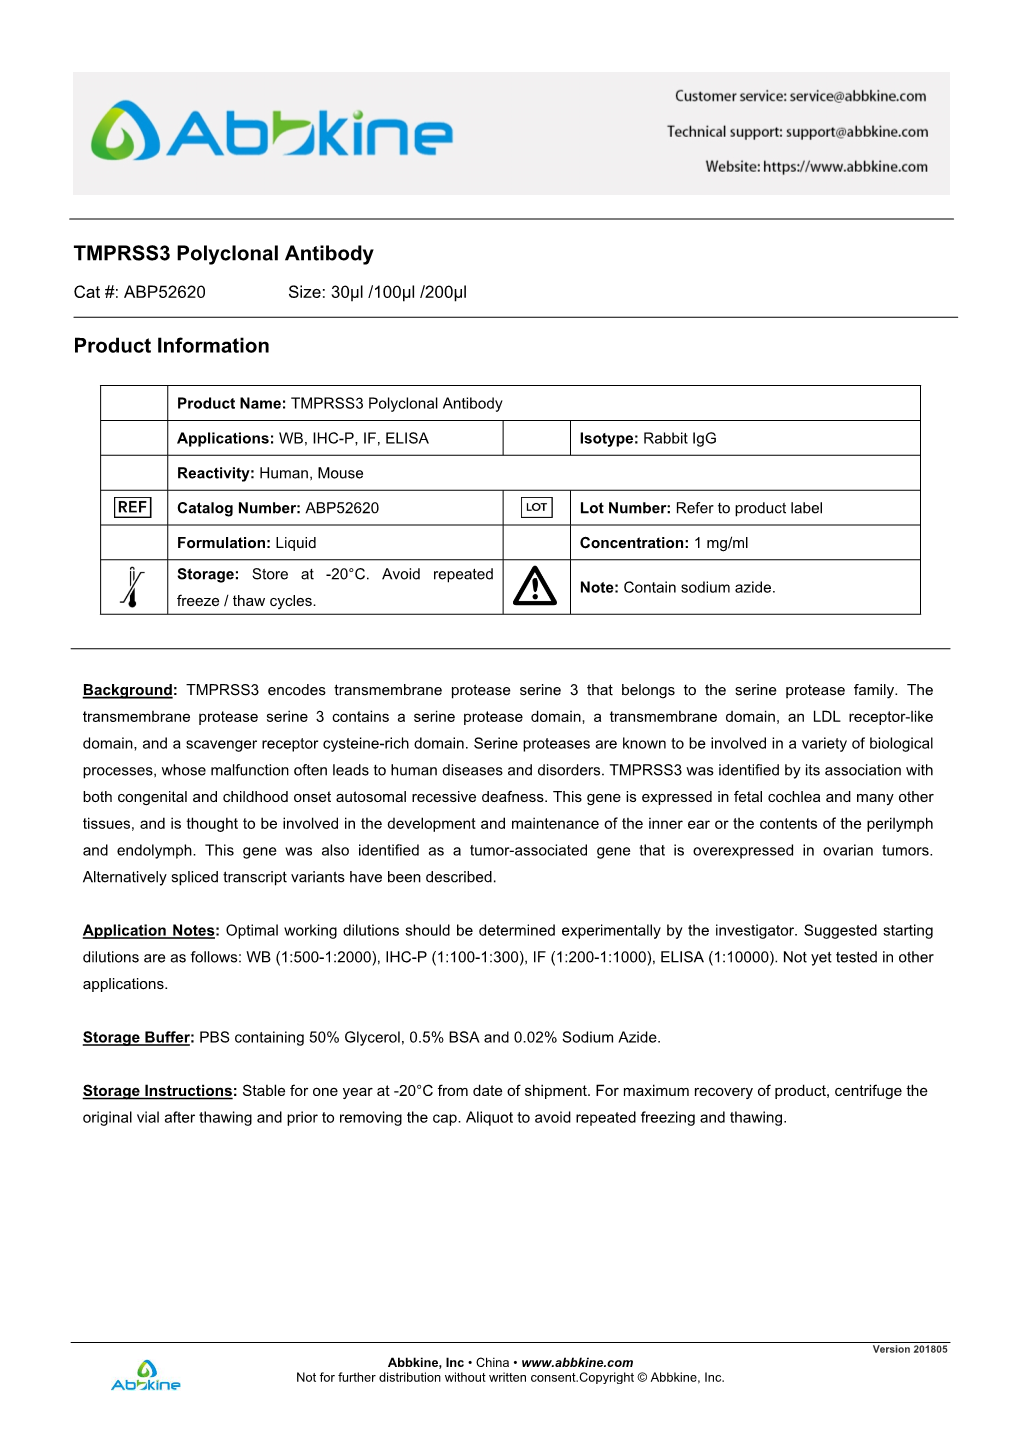 TMPRSS3 Polyclonal Antibody Product Information